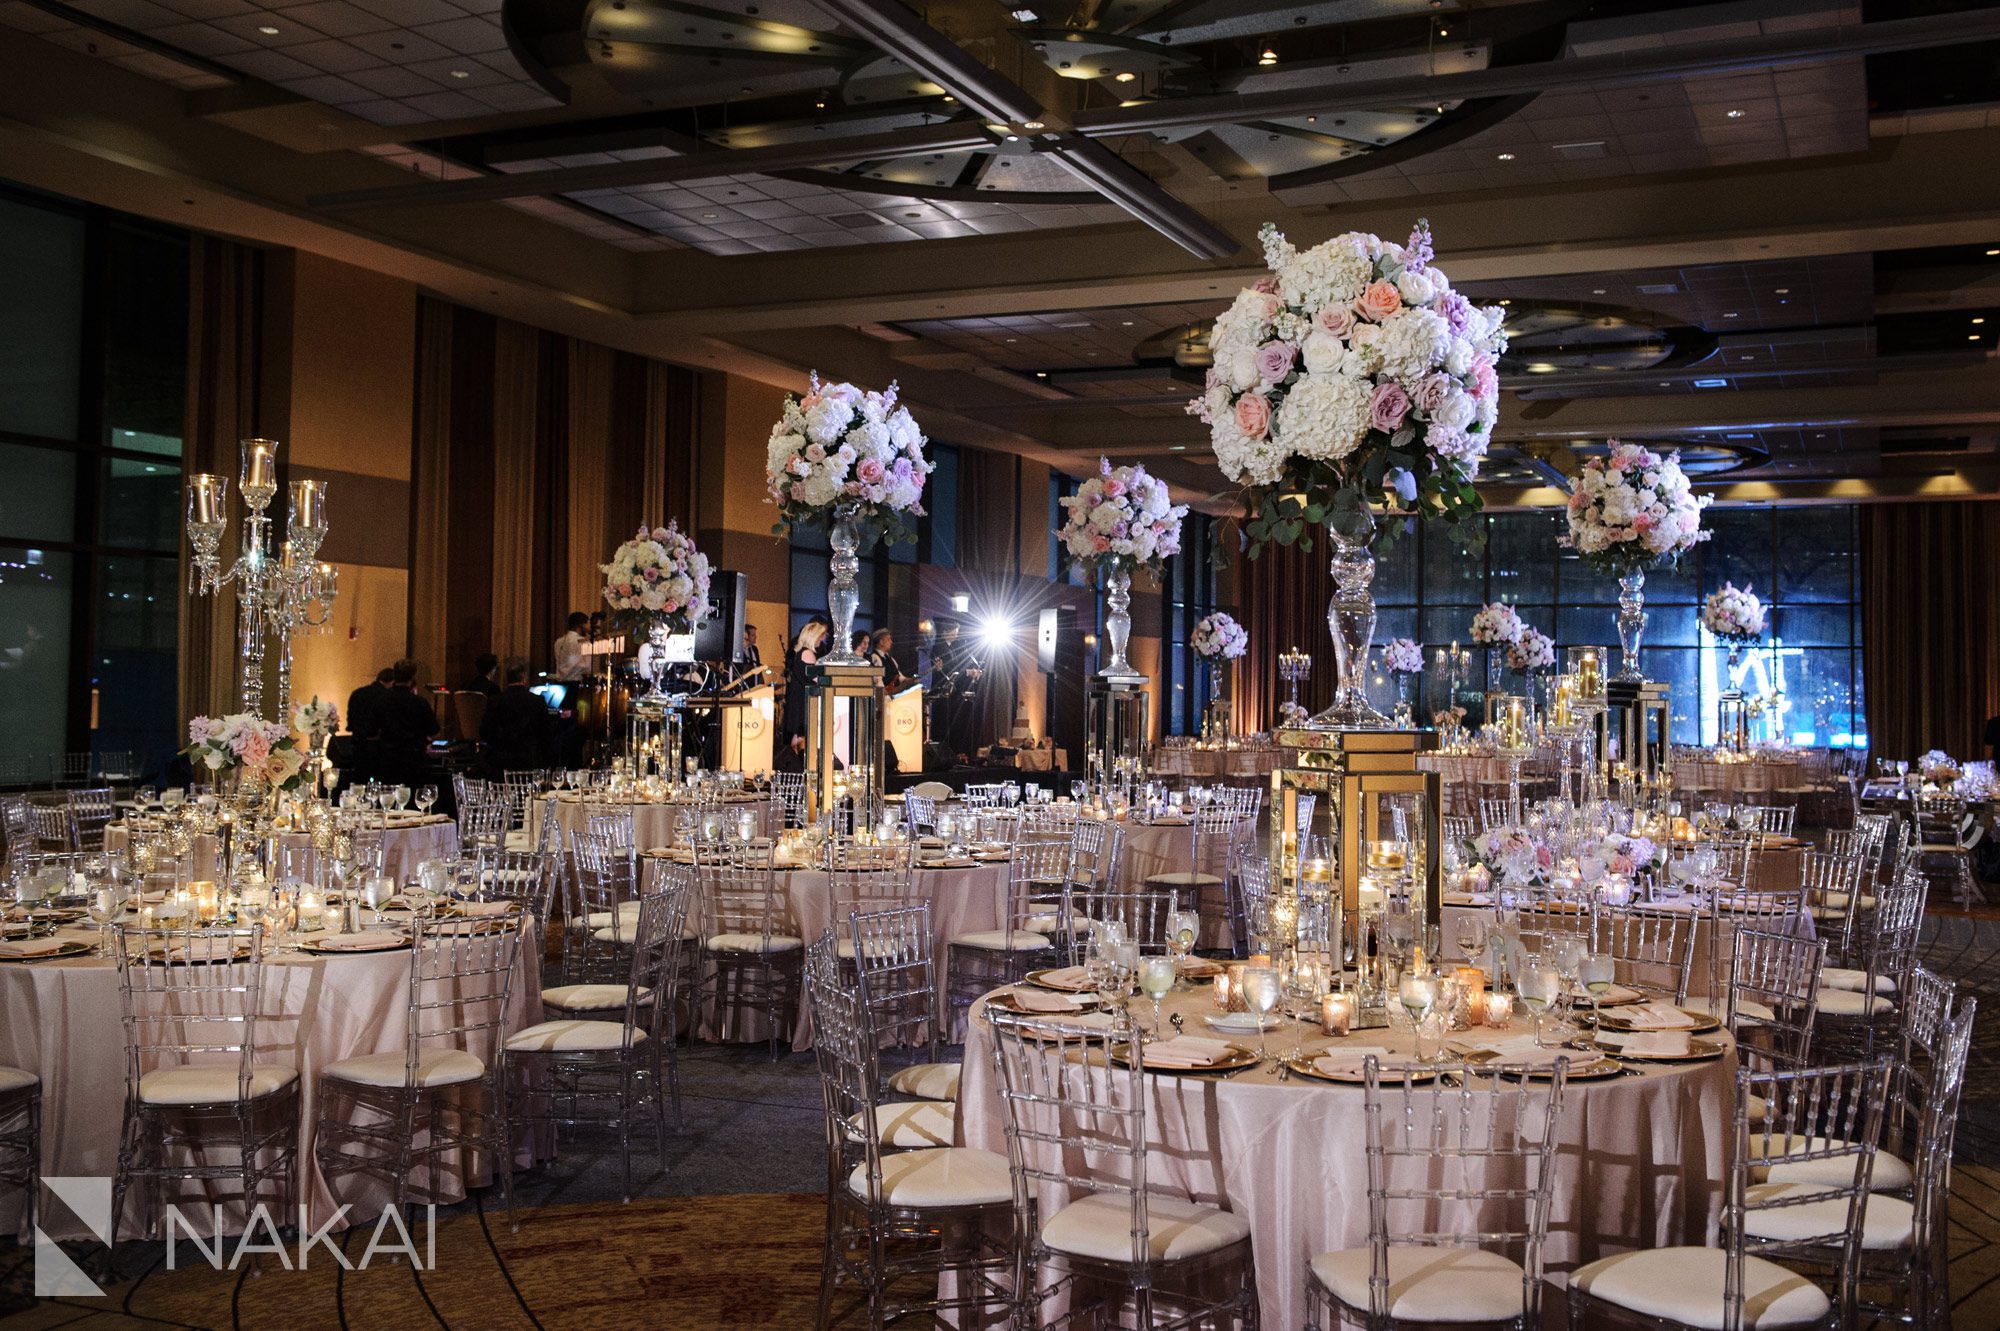 hyatt regency Chicago luxury wedding photos ballroom reception venue